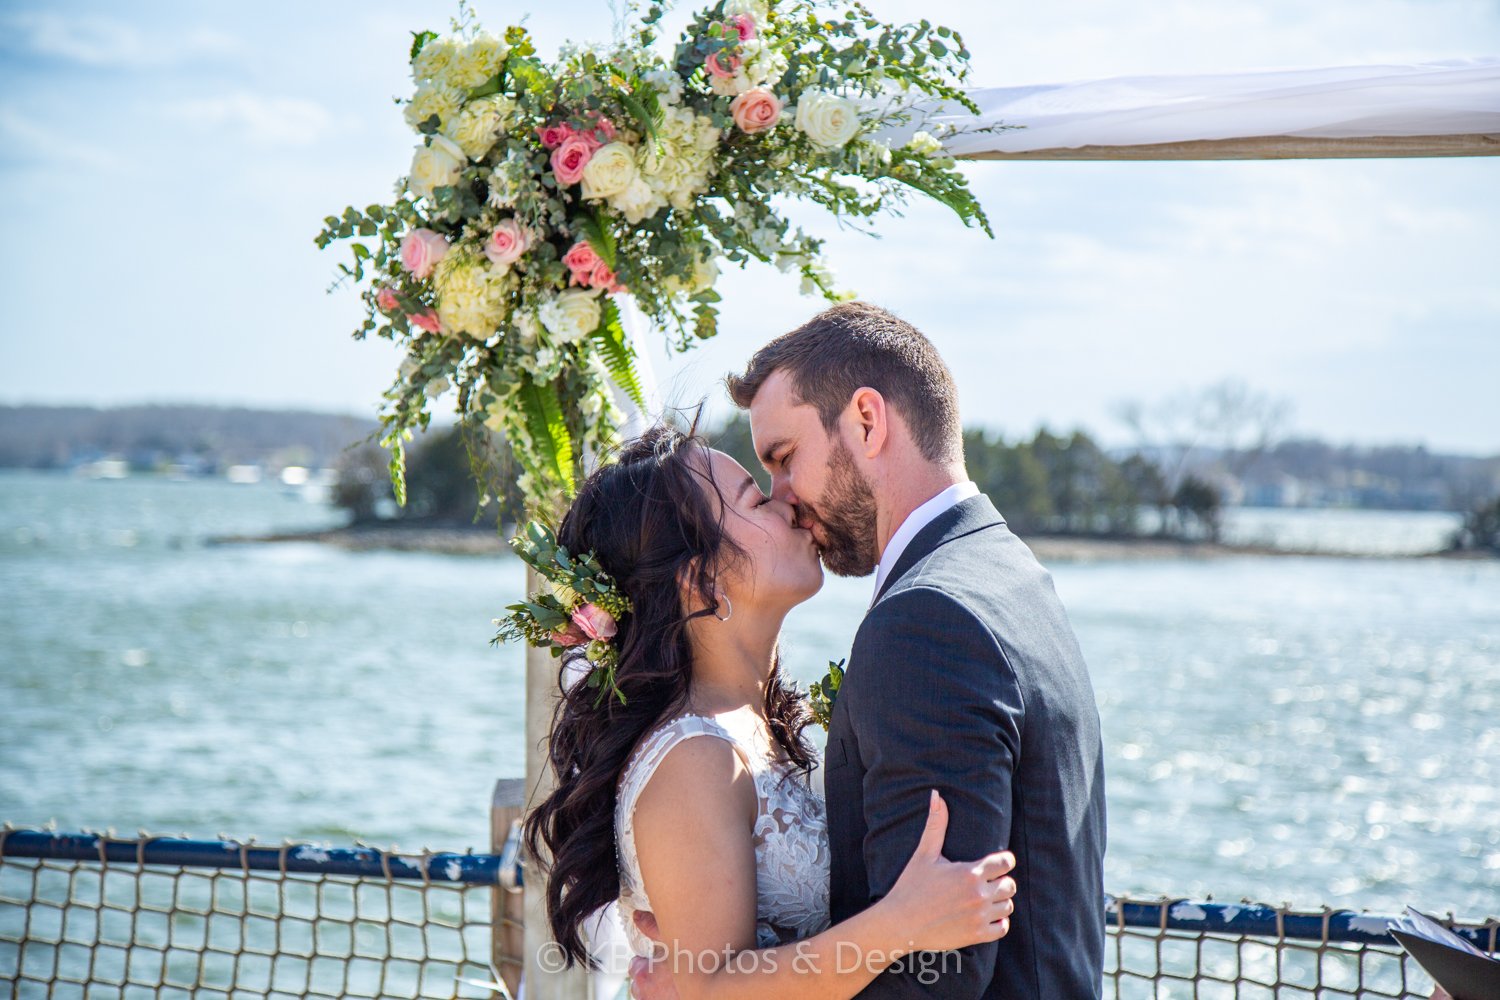 Wedding-Destination-Photography-Lake-of-the-Ozarks-Missouri-Wade-Natsuko-Jefferson-City-bride-groom-Lodge-of-Four-Seasons-wedding-photographer-KB-Photos-and-Design-133.jpg